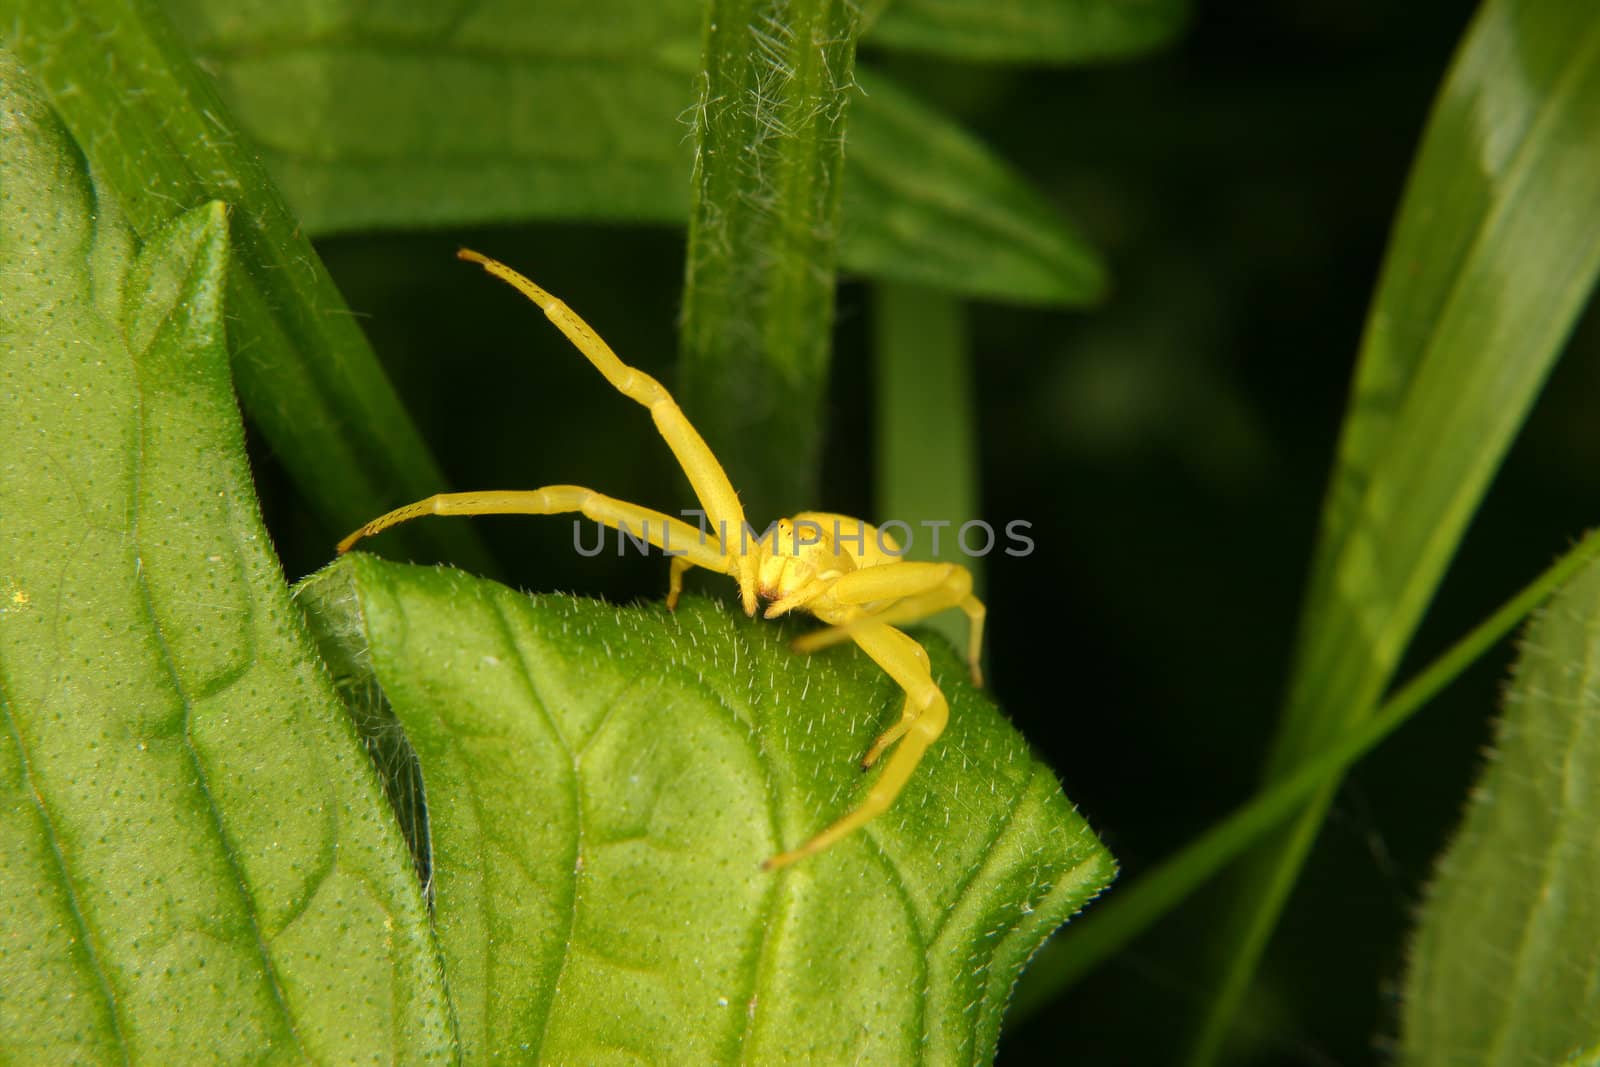 Goldenrod crab spider (Misumena vatia) by tdietrich